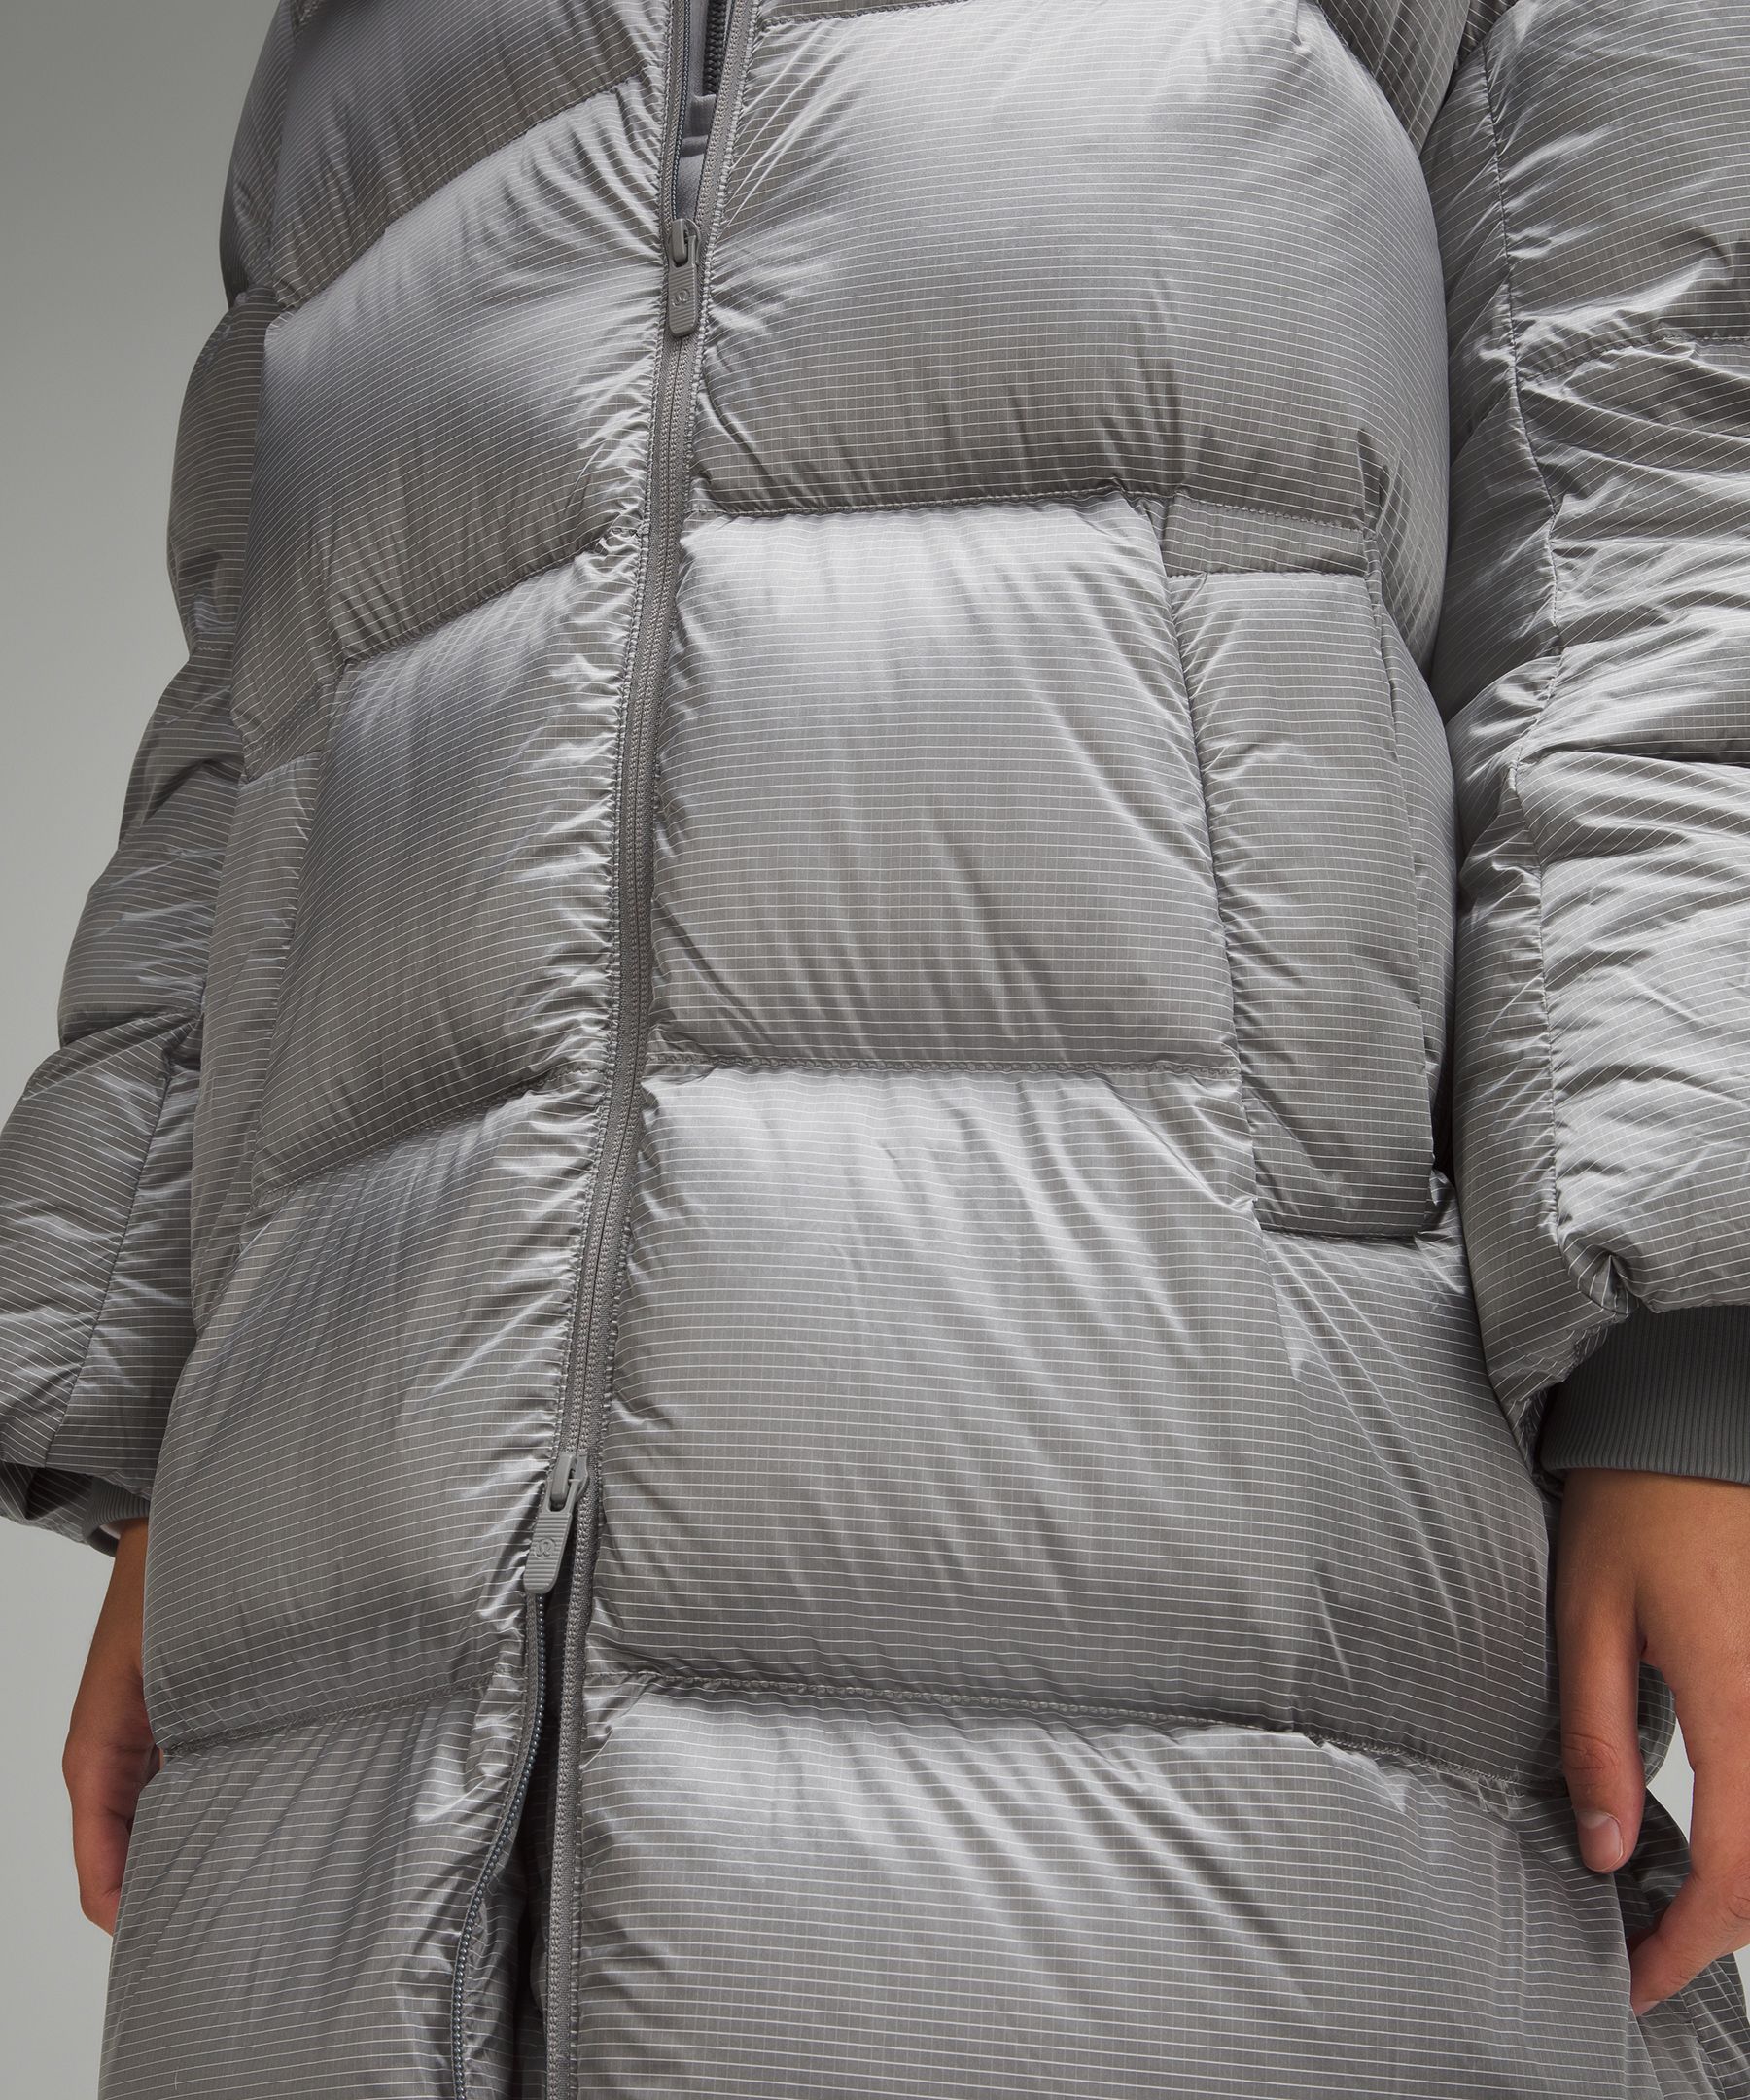 Down-Filled Long Puffer Jacket, Women's Coats & Jackets